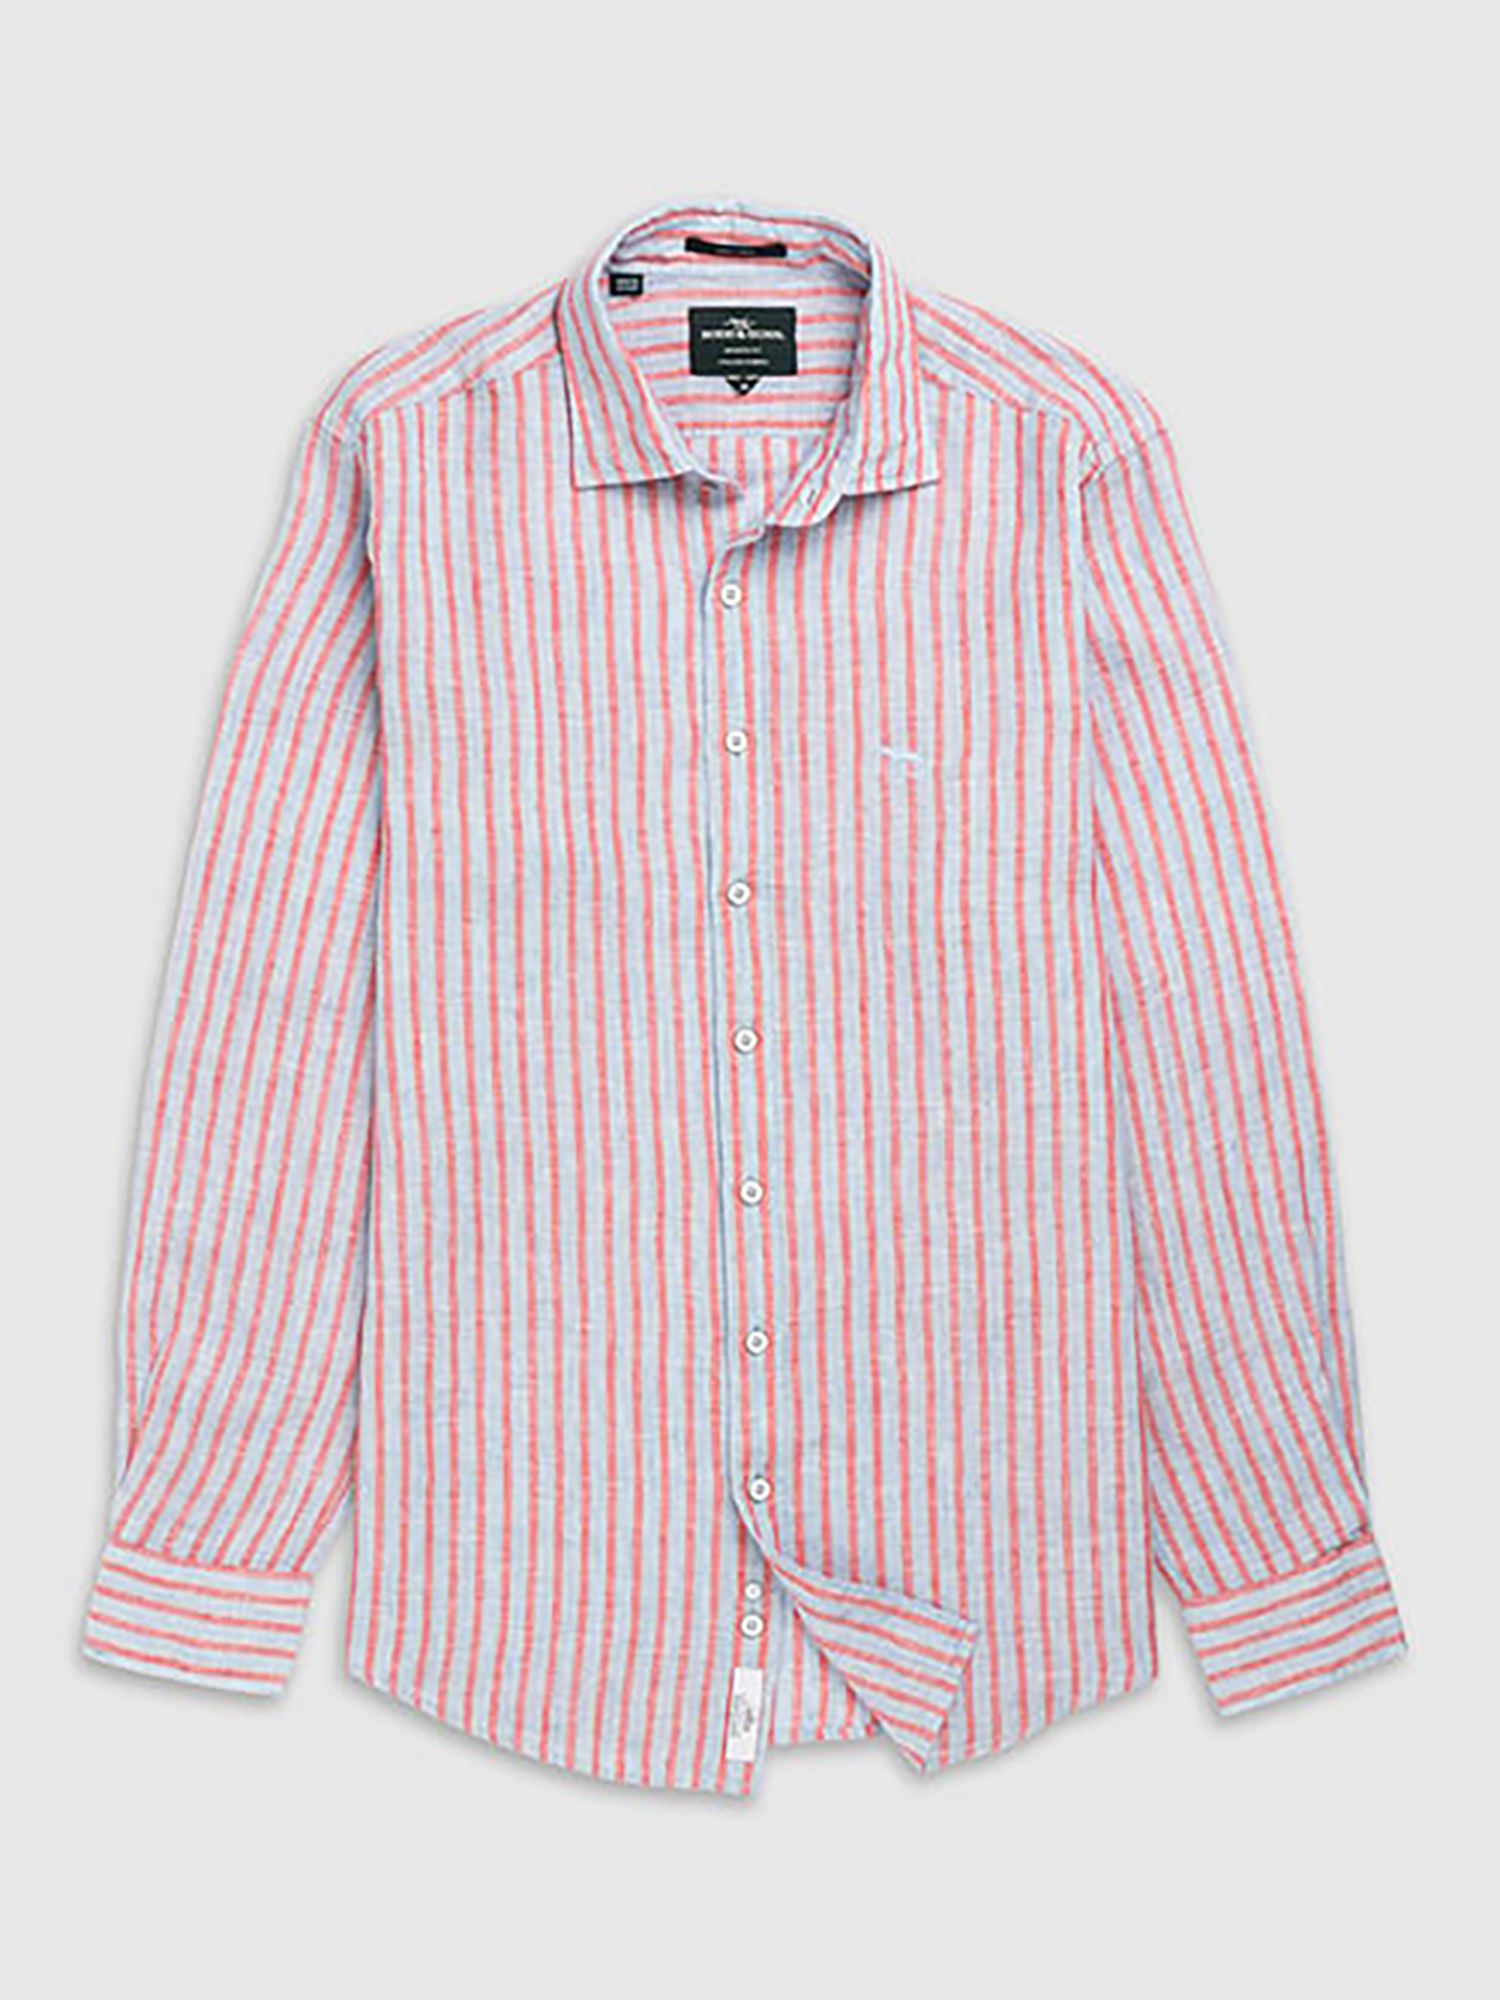 Buy Rodd & Gunn Mclean Park Linen Striped Shirt, Sky Blue/Red Online at johnlewis.com